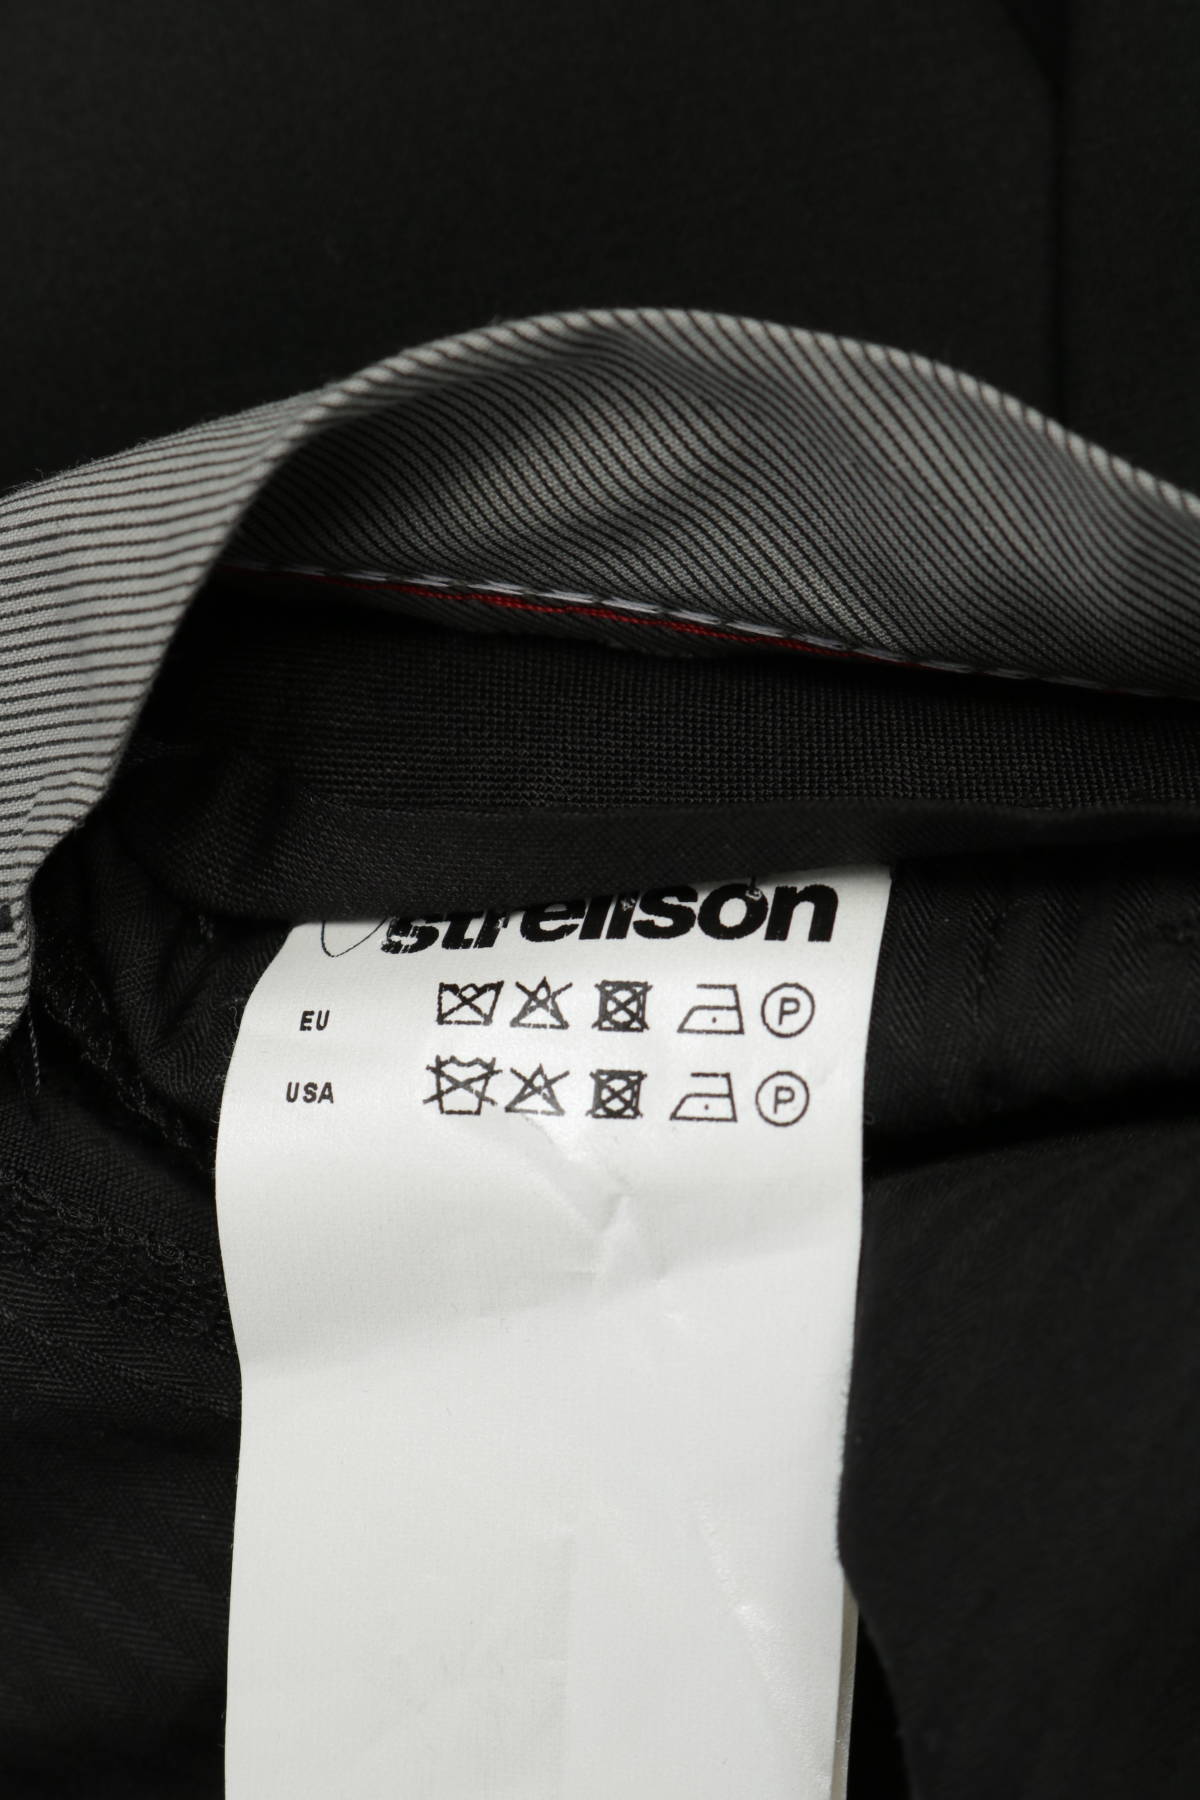 Официален панталон STRELLSON4